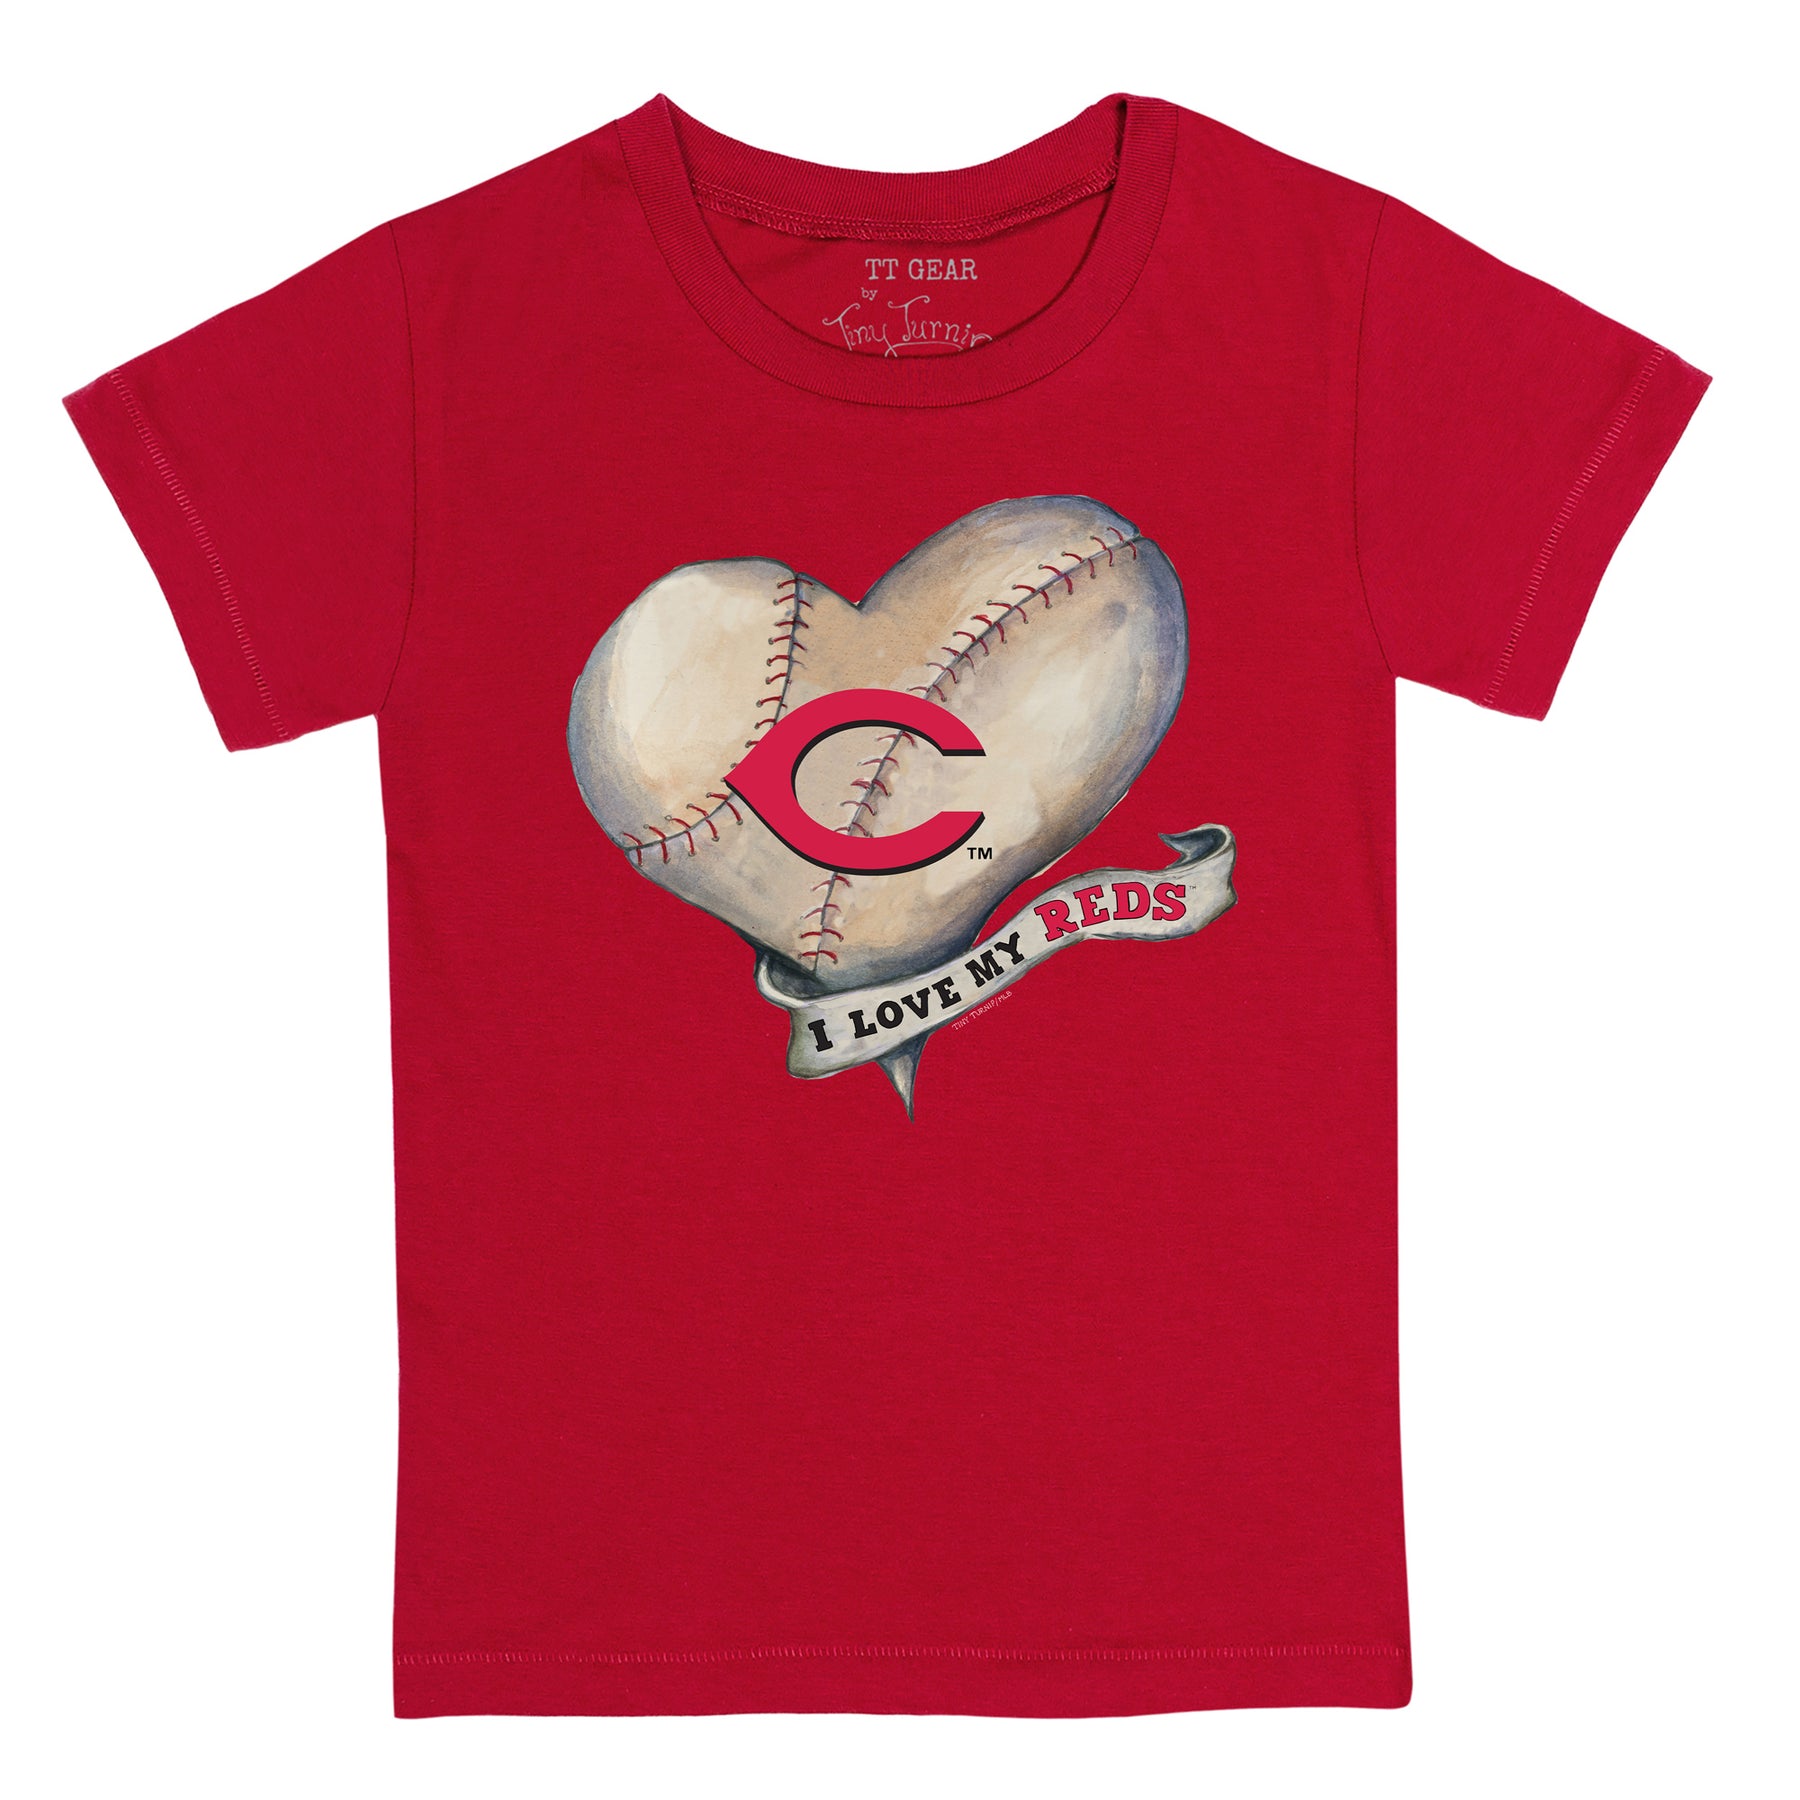 Youth Tiny Turnip White New York Yankees Heart Banner T-Shirt Size: Large